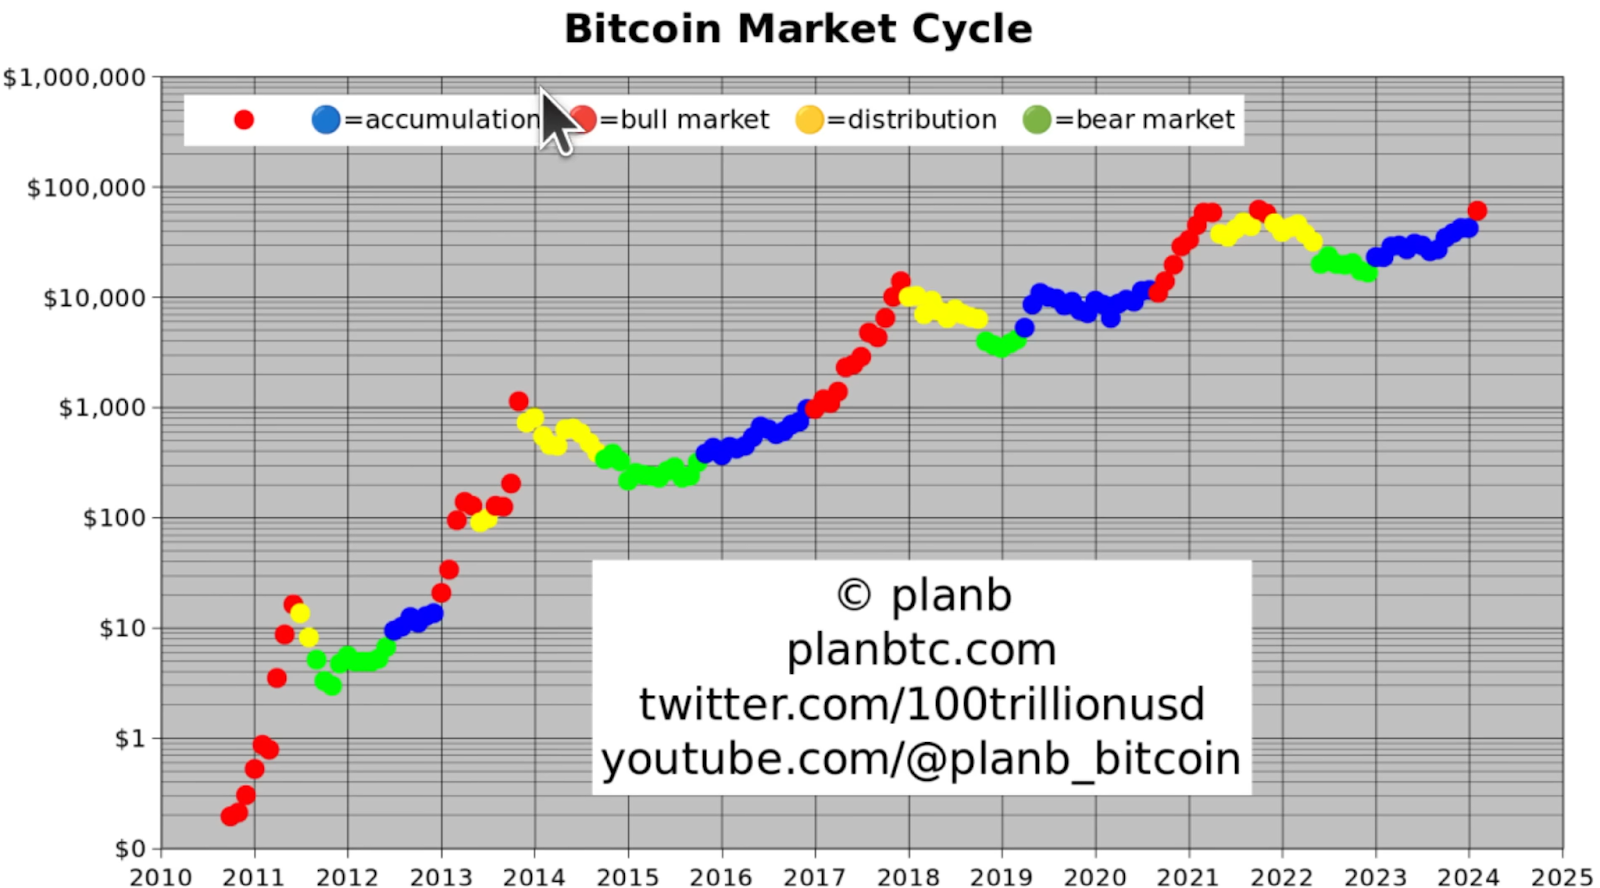 Bitcoin Market Cycle Chart via Plan B on Youtube

